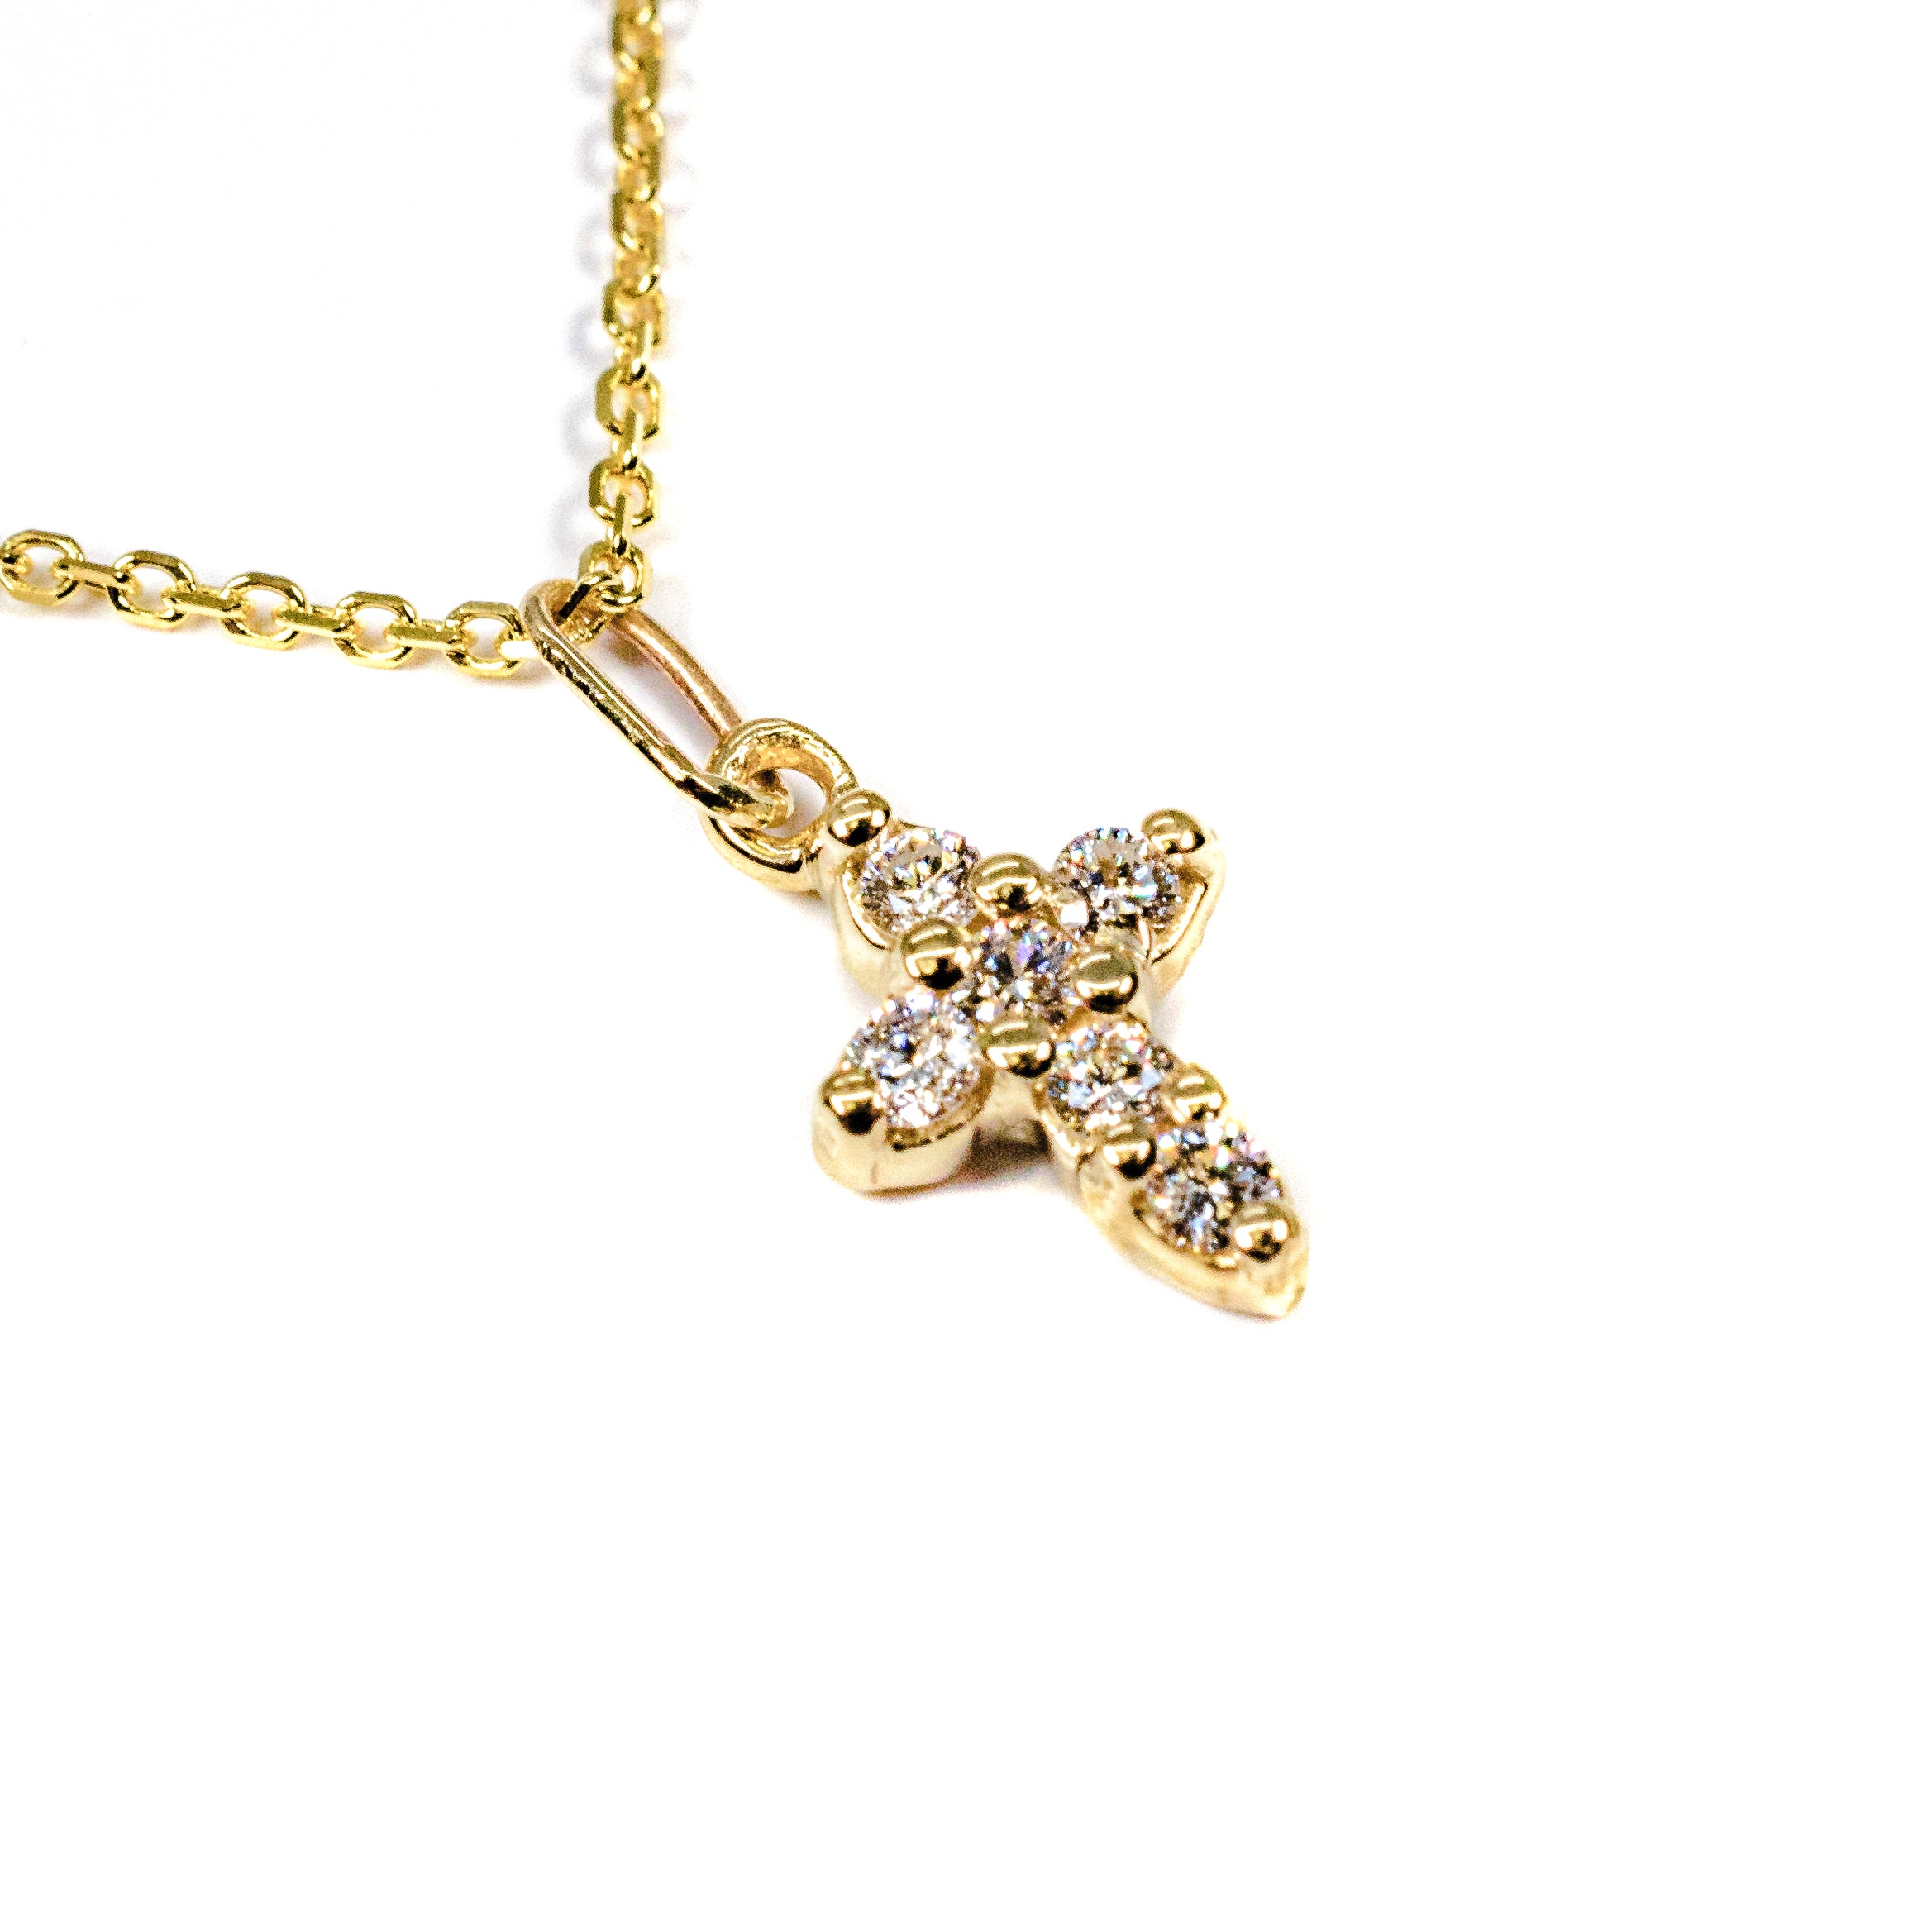 14kt Yellow Gold Small Diamond Cross 18" Necklace